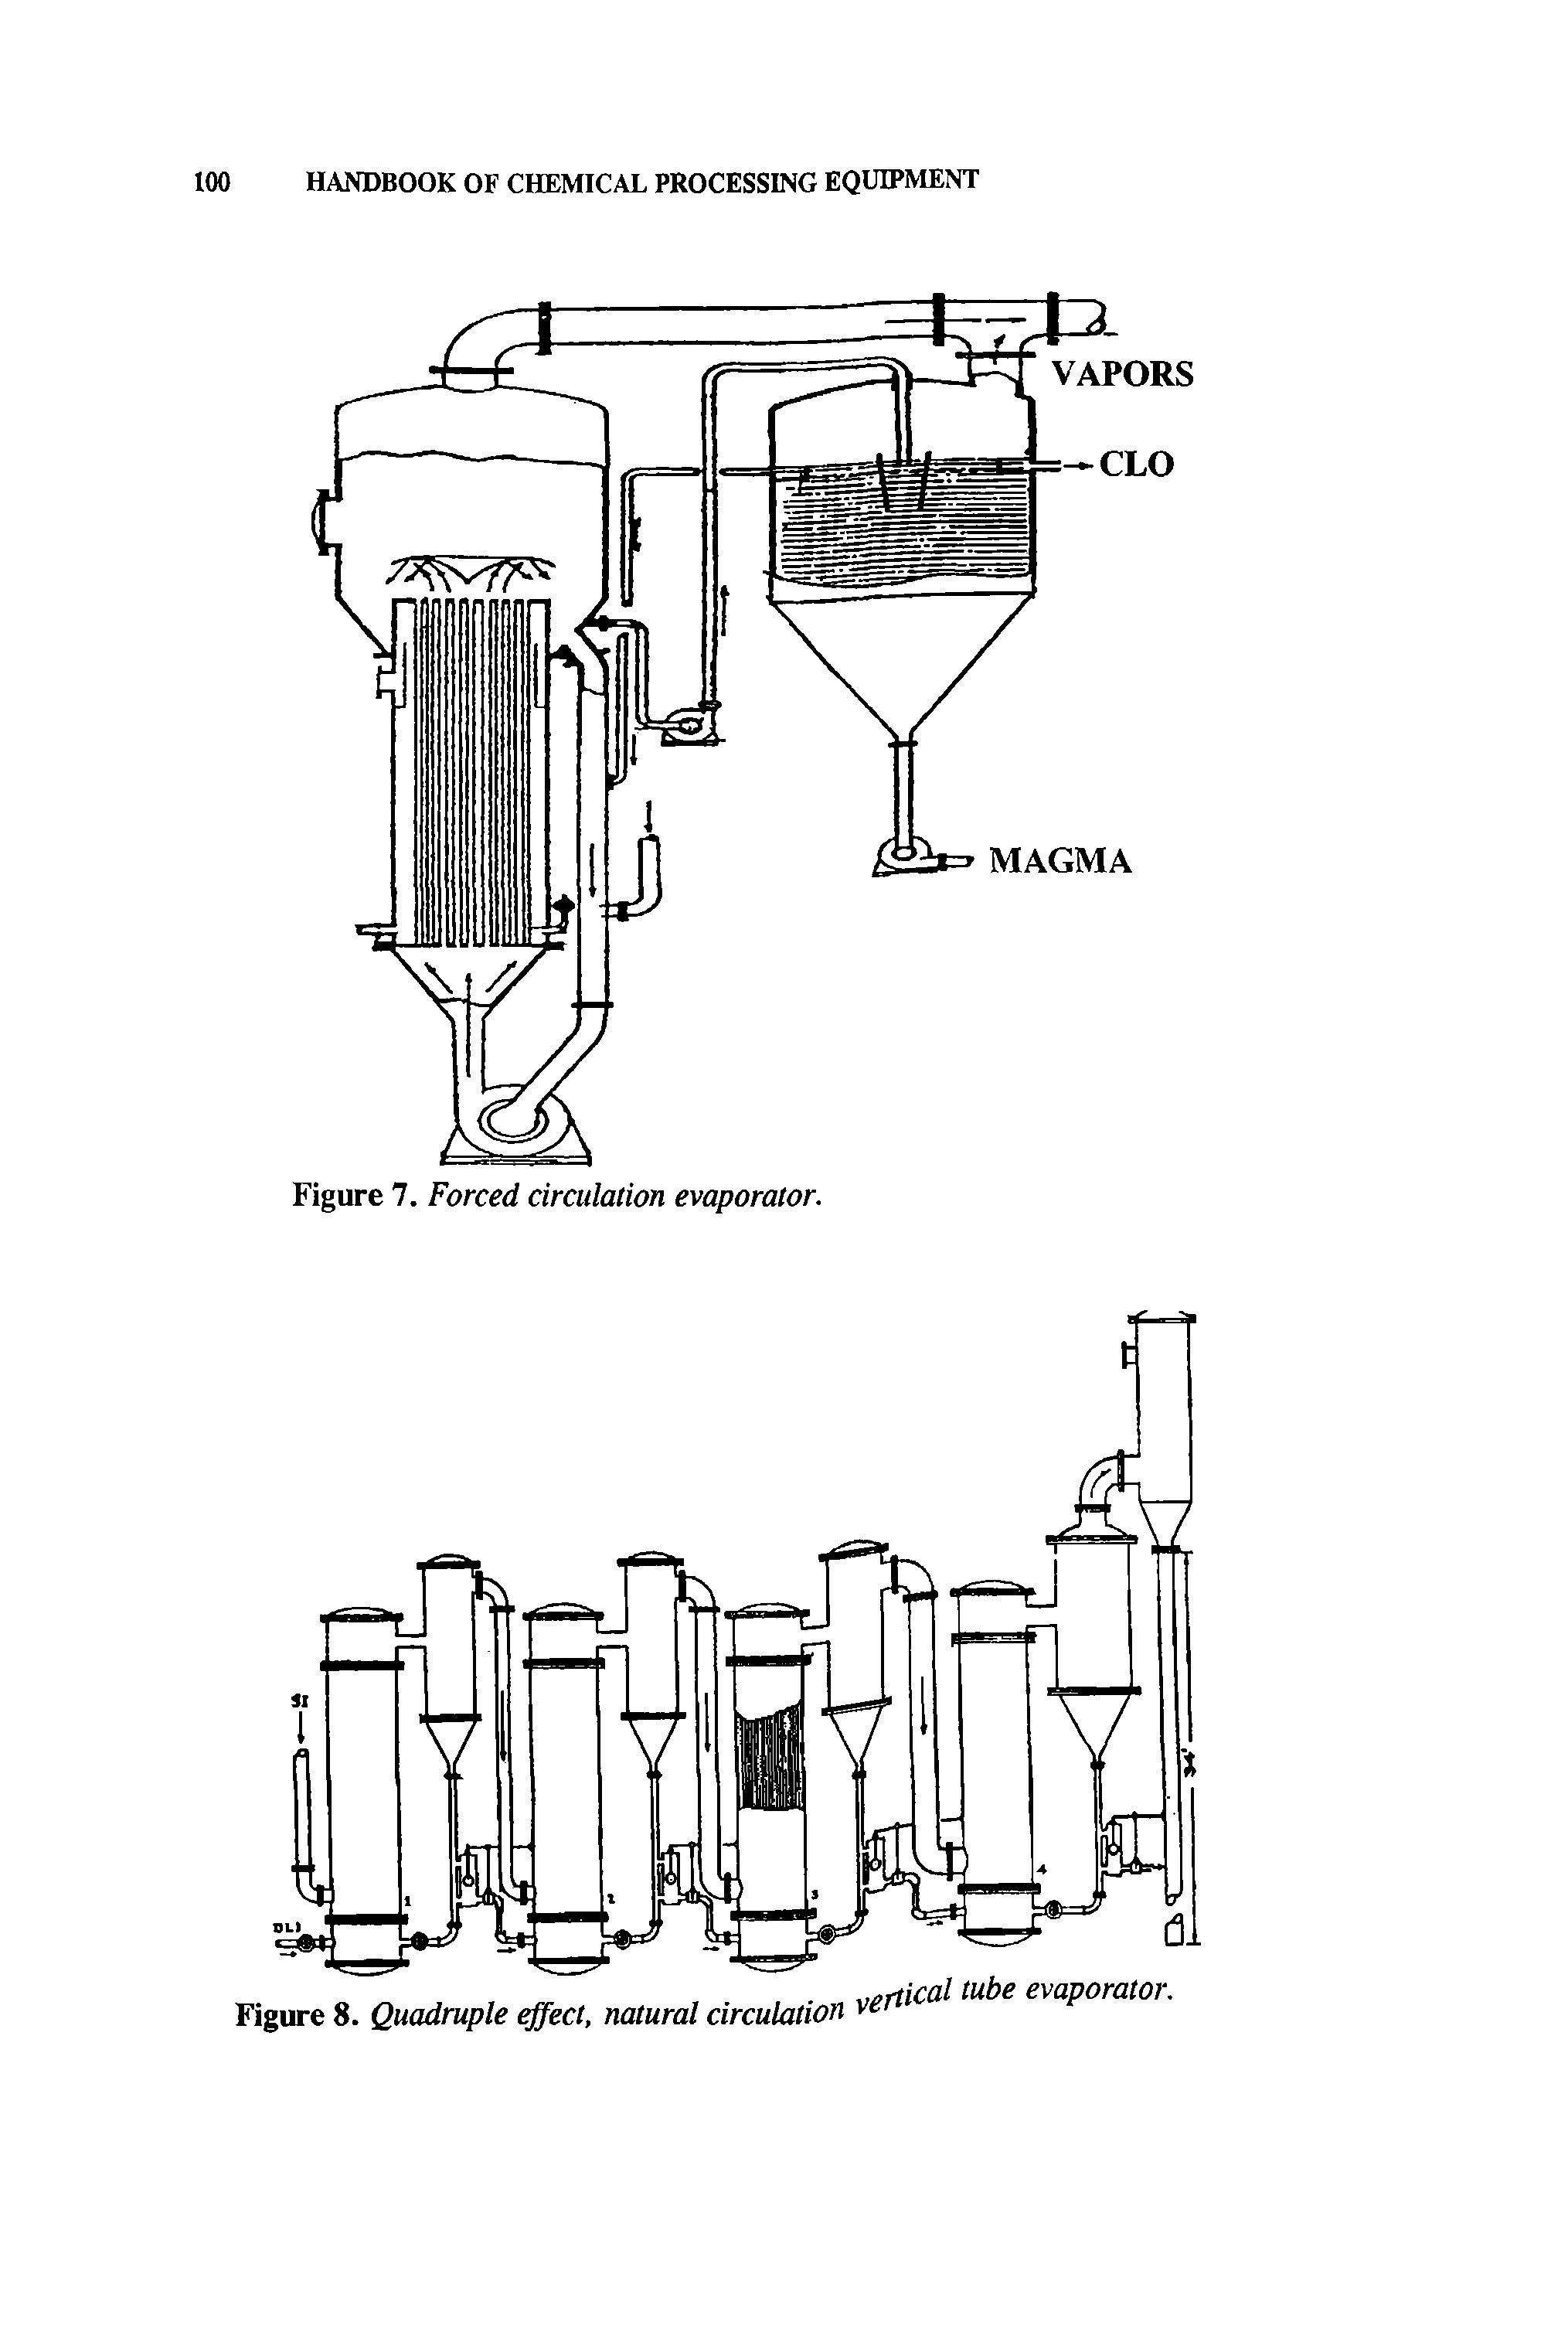 Figure 8. Quadruple effect. natural circulation vertical tube evaporator.